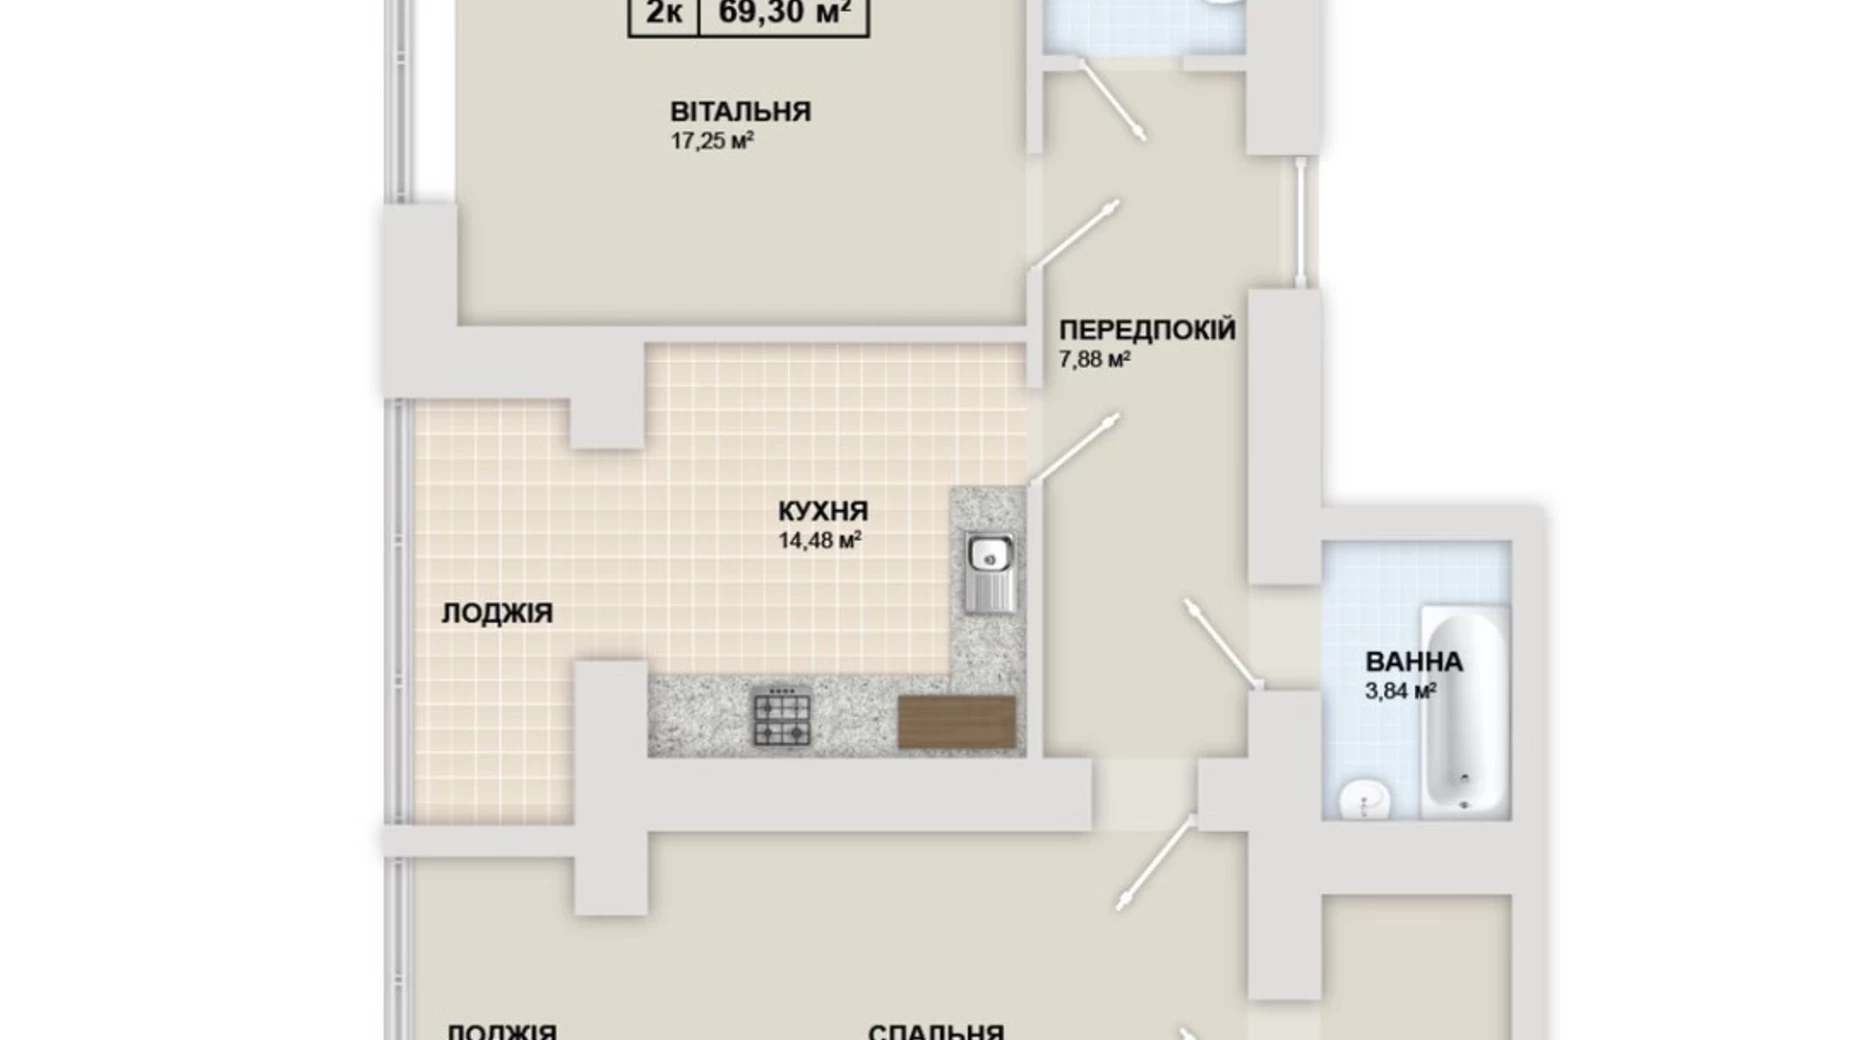 Продается 2-комнатная квартира 69.3 кв. м в Ивано-Франковске - фото 3